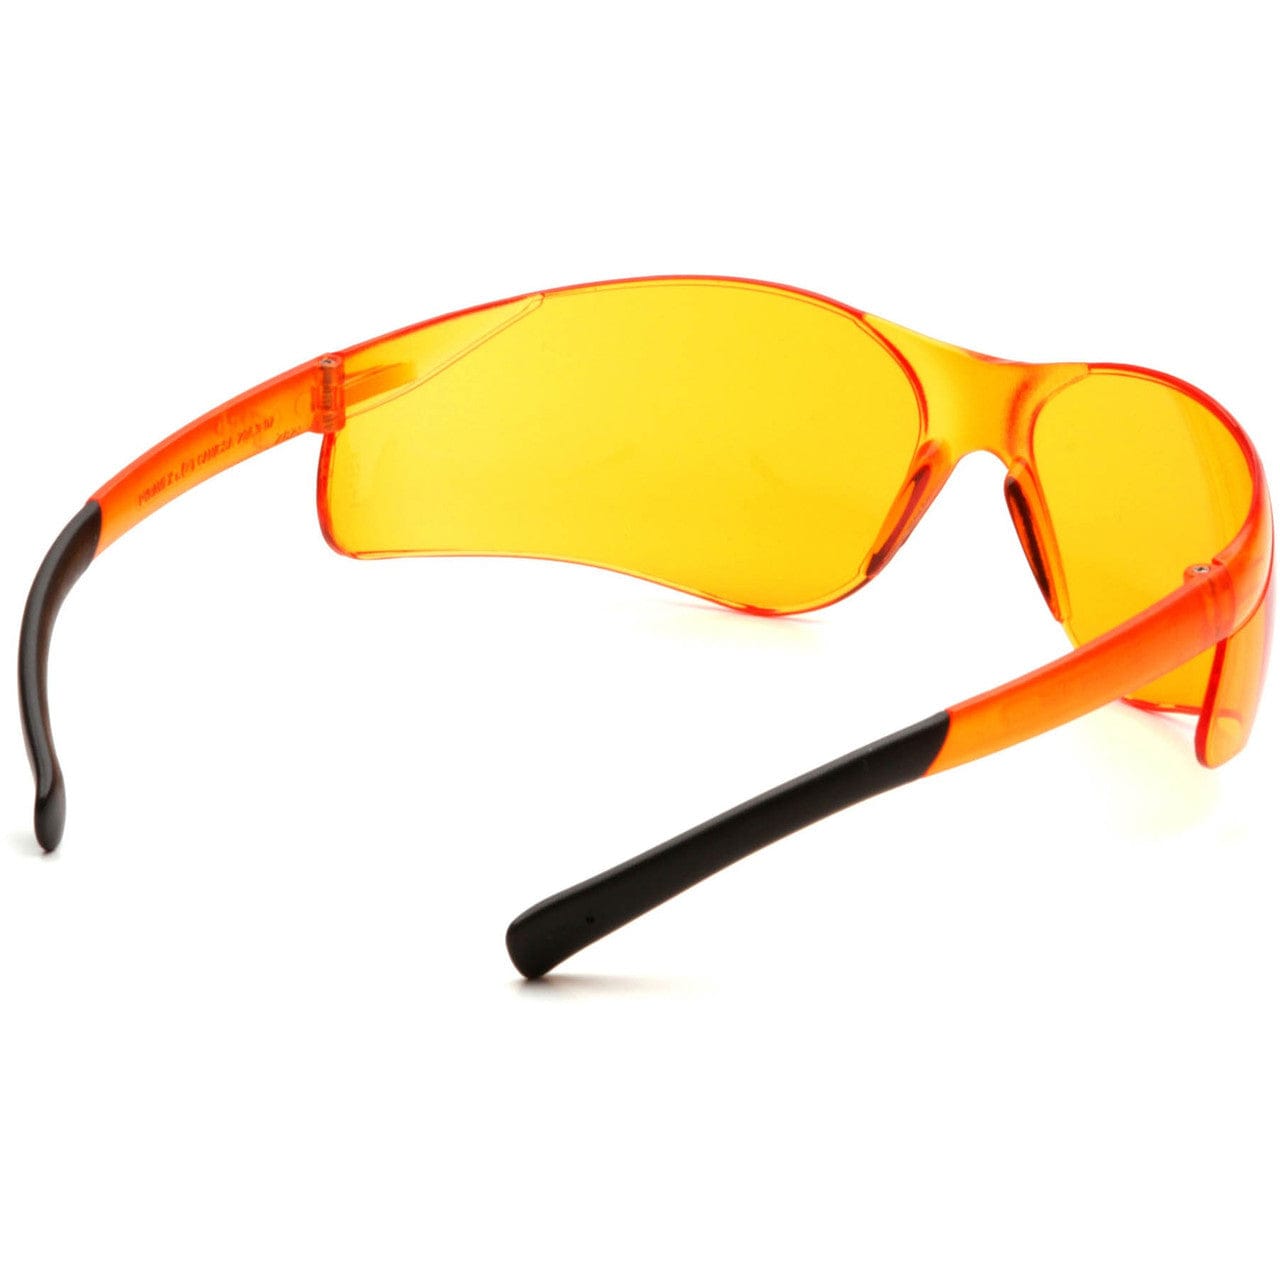 Pyramex Ztek Safety Glasses with Orange Lens S2540S Inside View